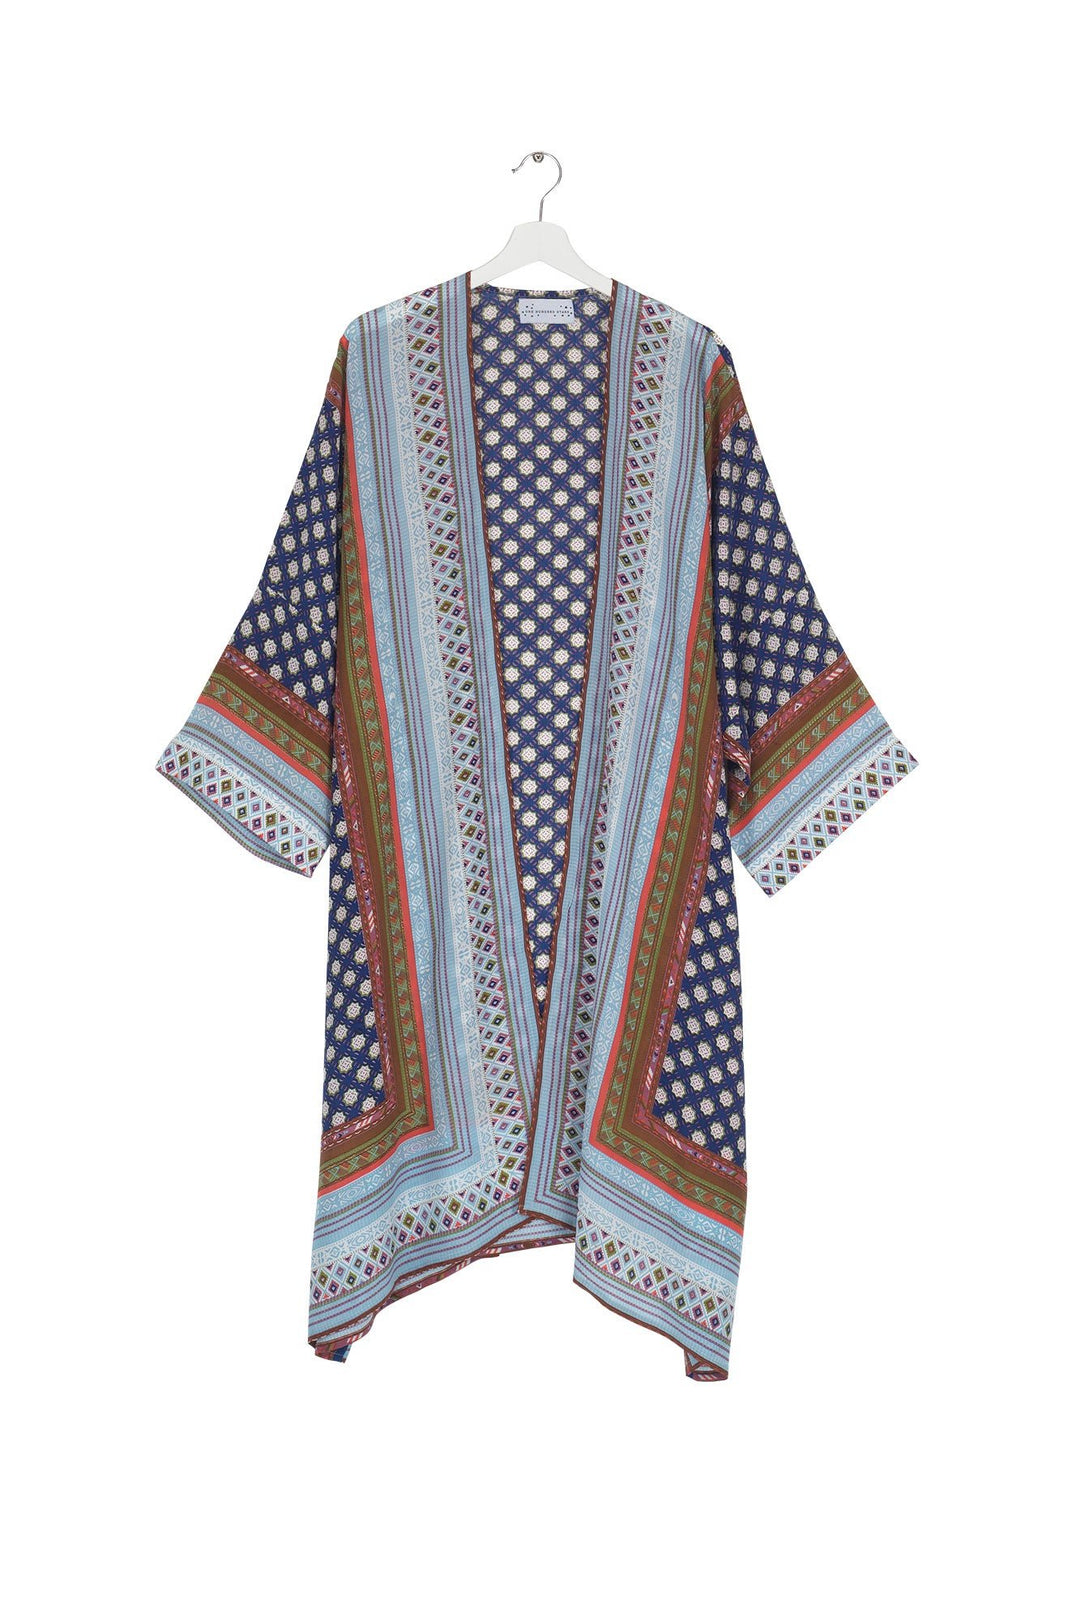 Moorish Indigo Grande Kimono - One Hundred Stars